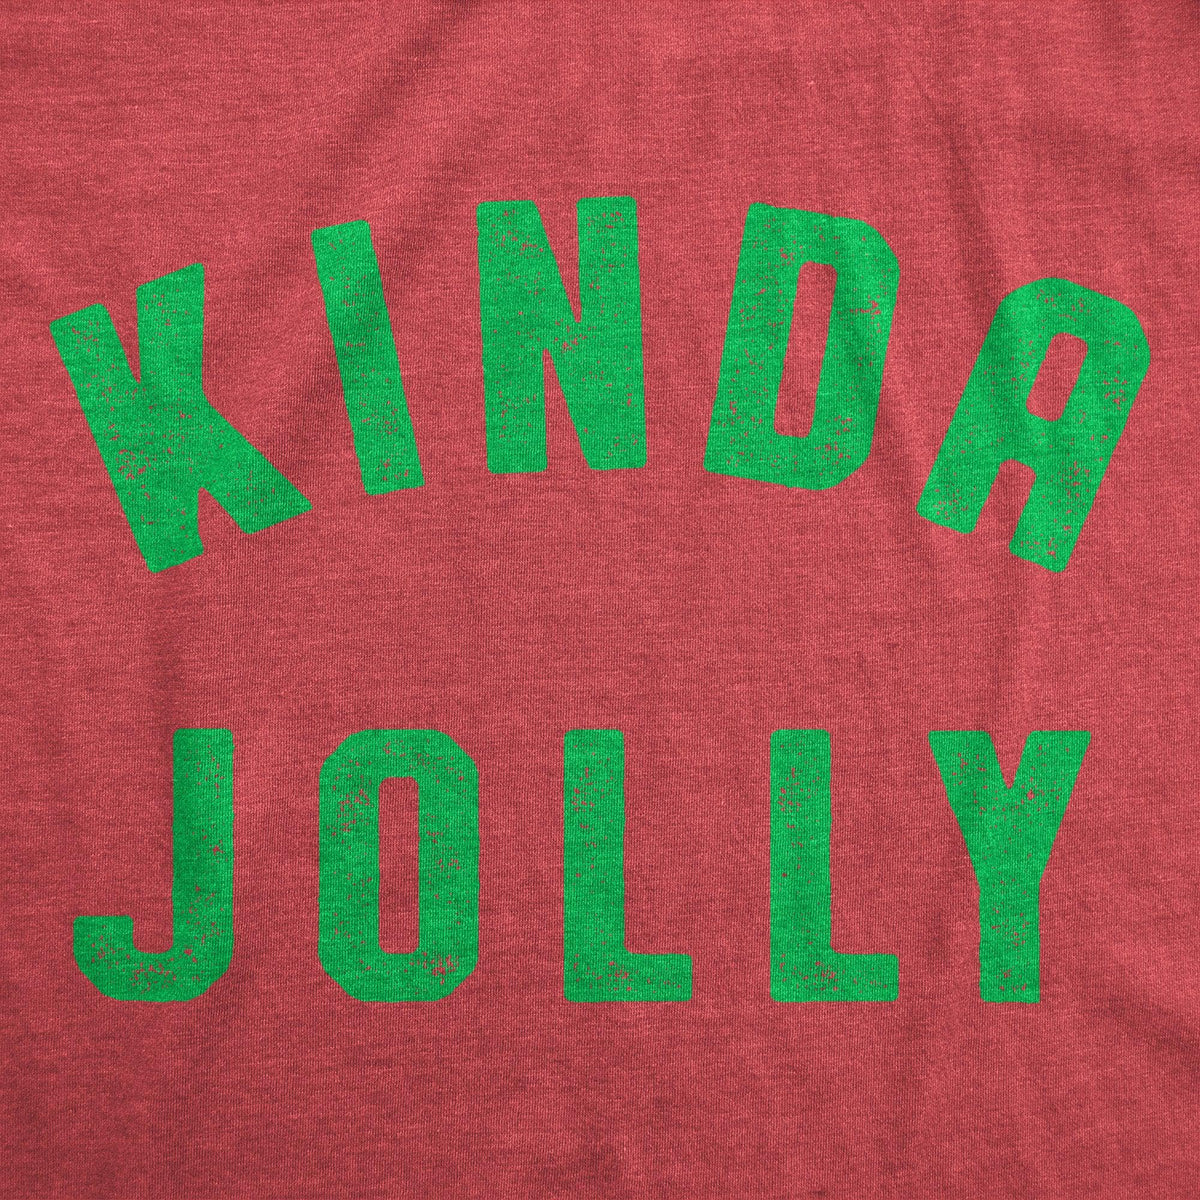 Kinda Jolly Women&#39;s Tshirt  -  Crazy Dog T-Shirts